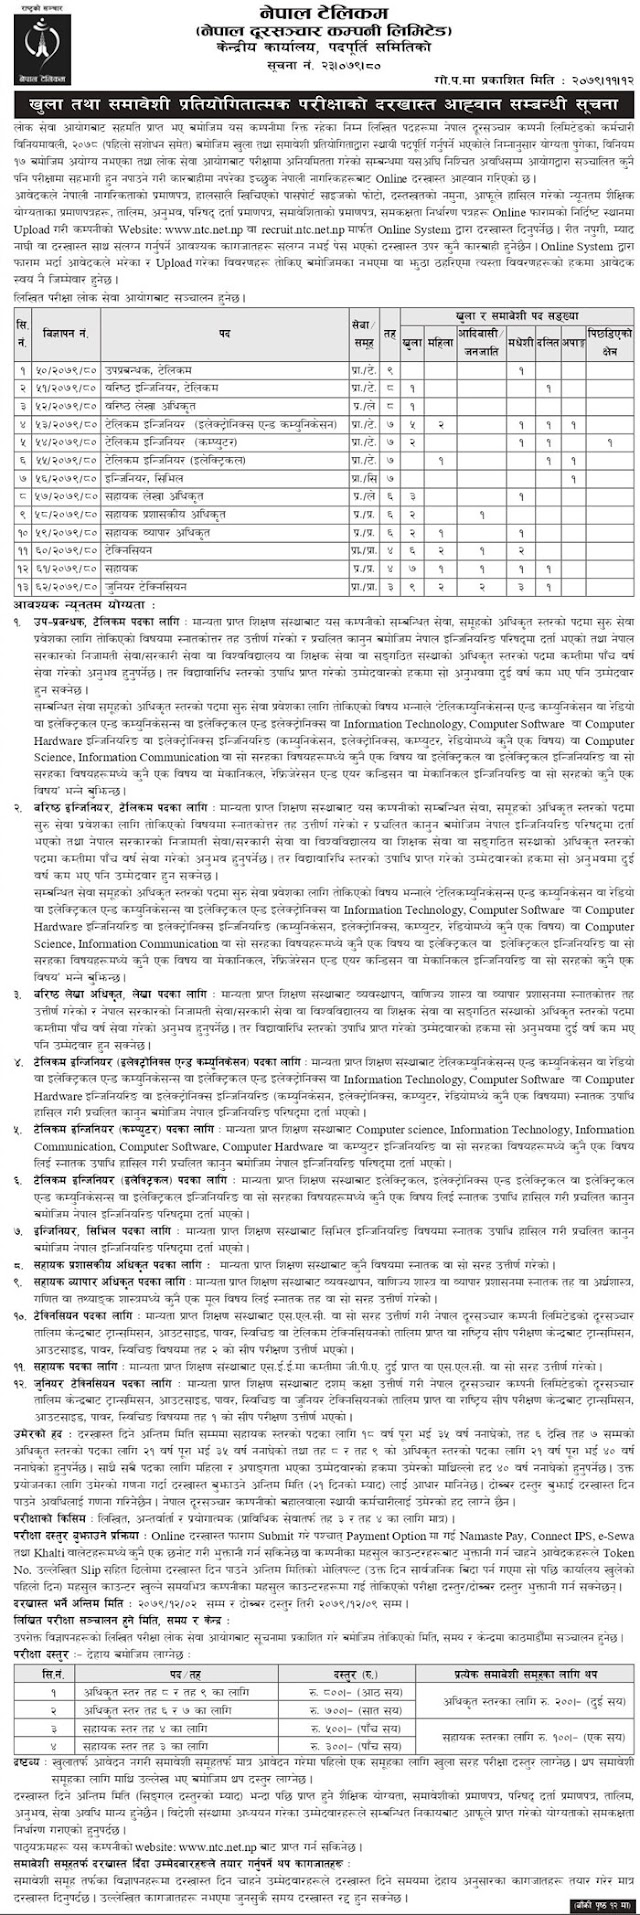 Nepal Telecom / NTC Vacancy 2079